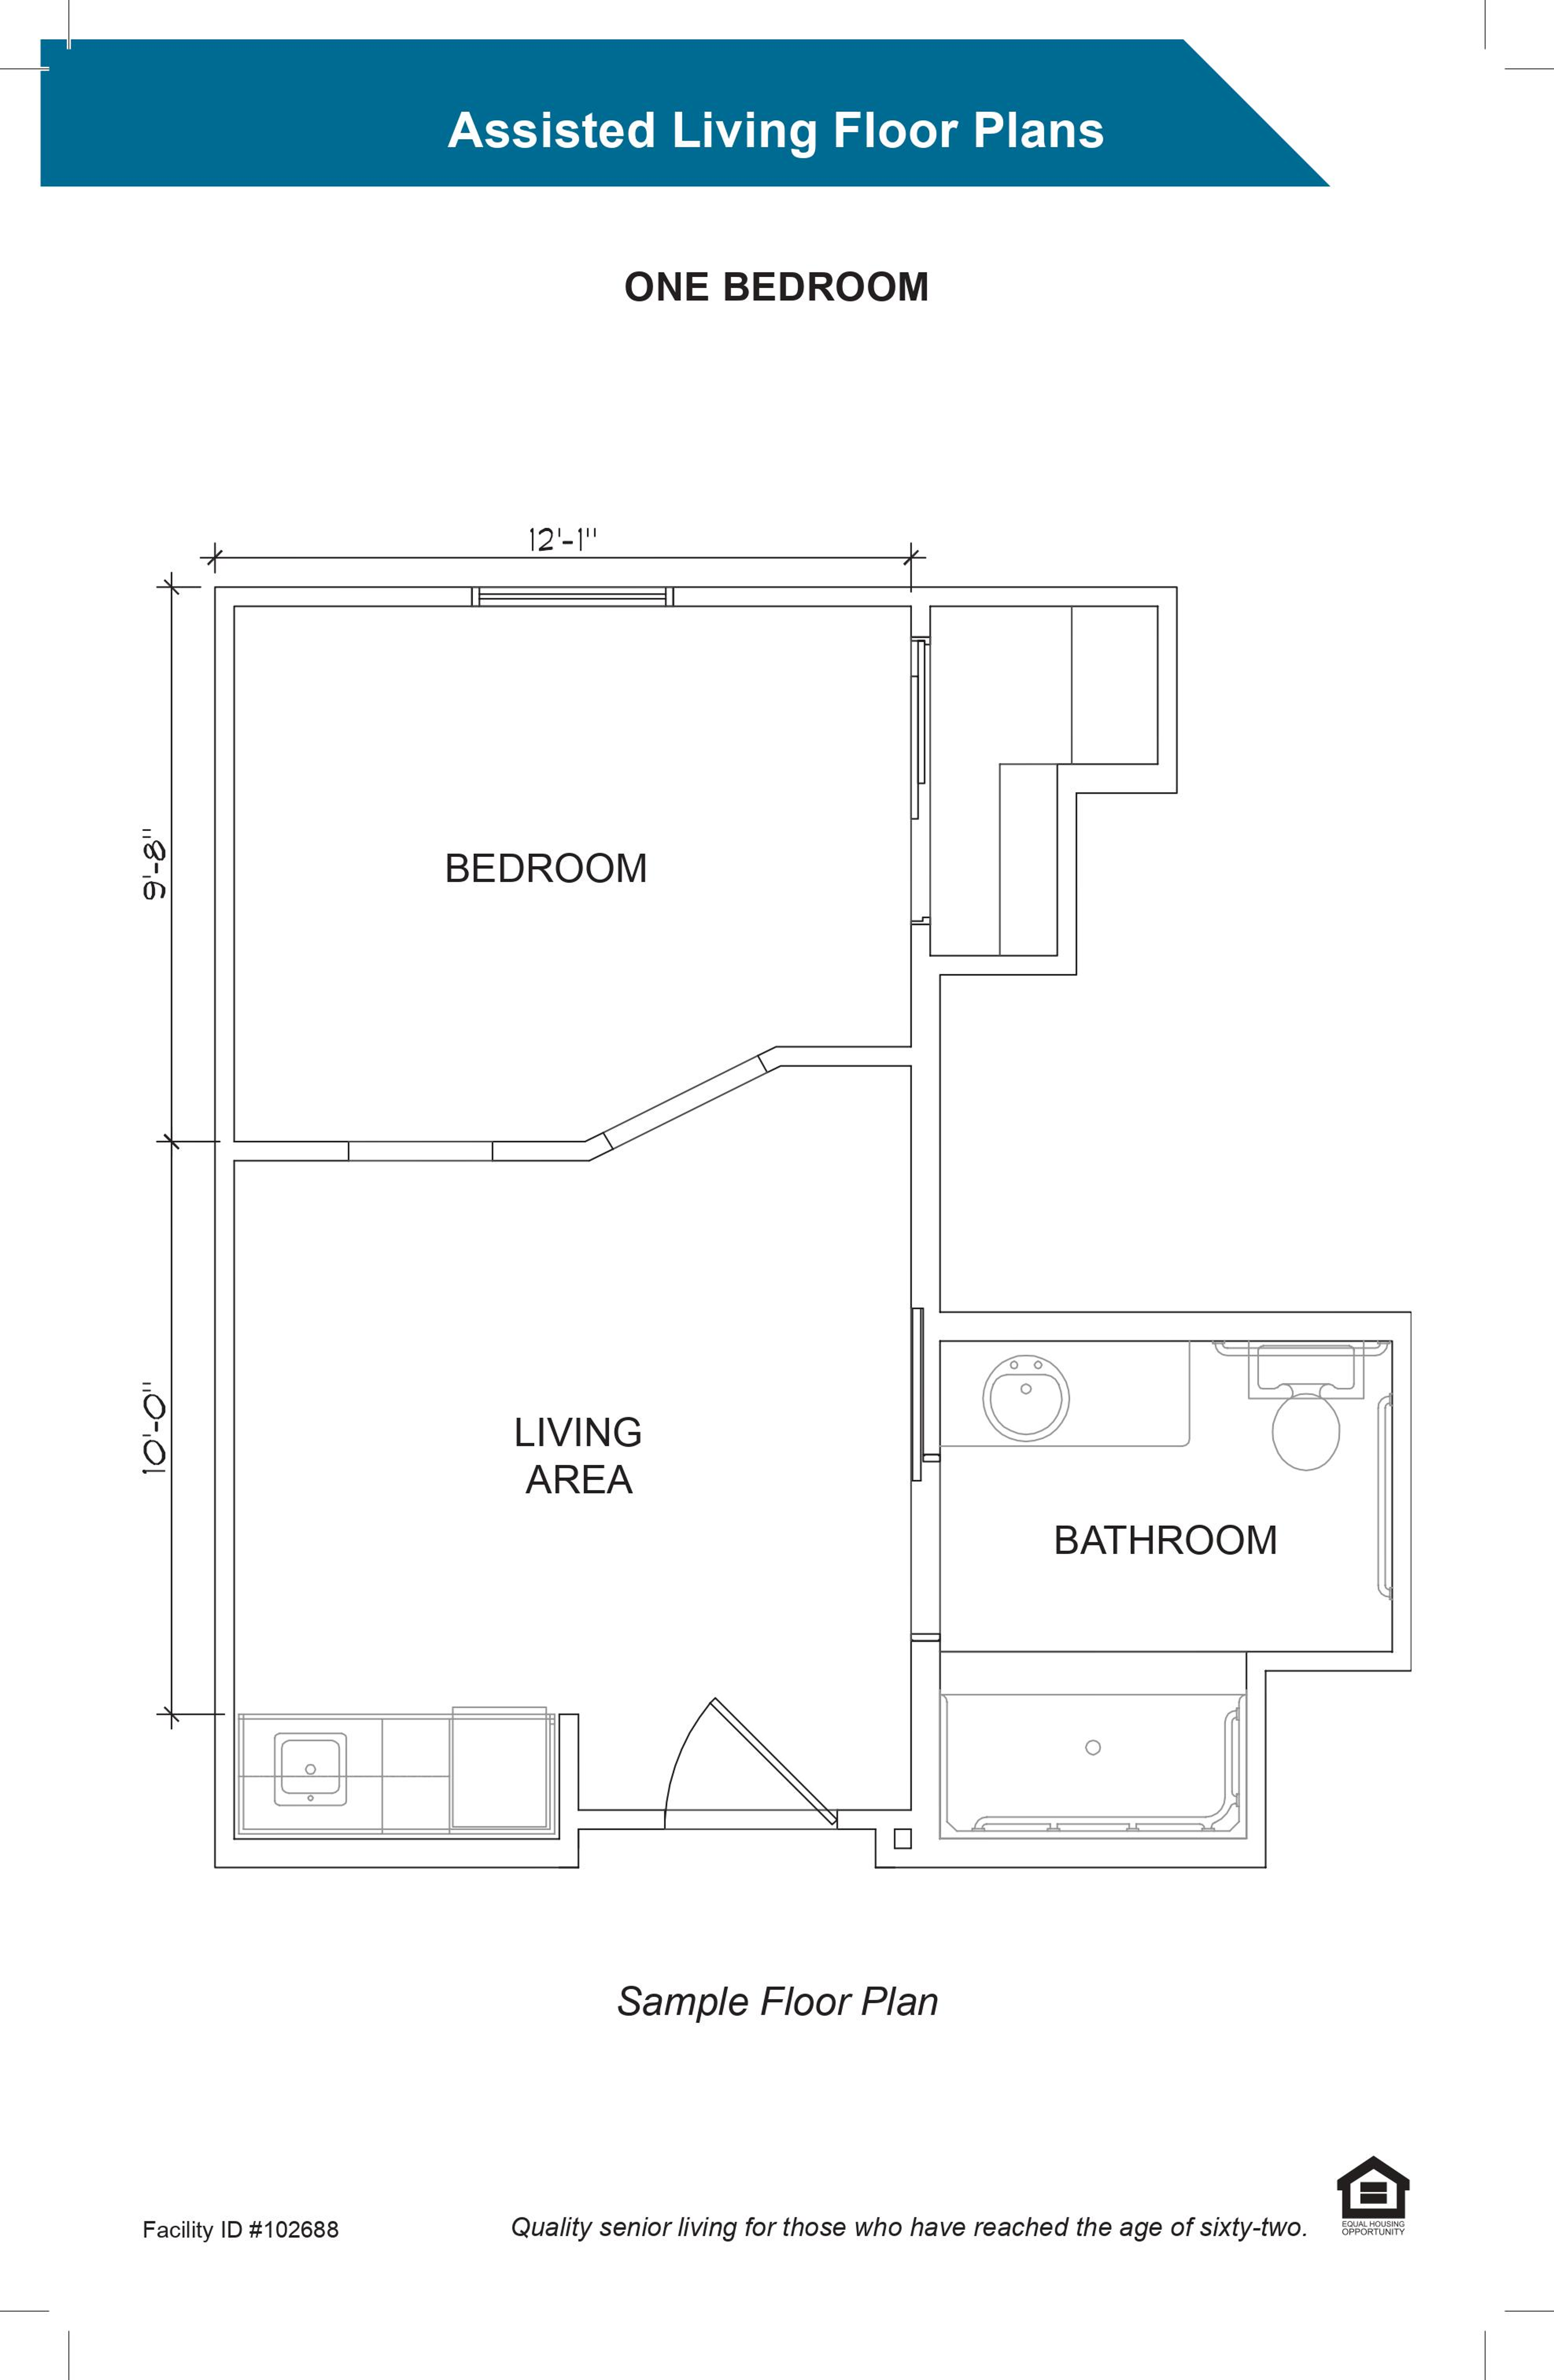 Floorplan - Pecan Pointe - 1 bed, 1 bath, Standard Assisted Living